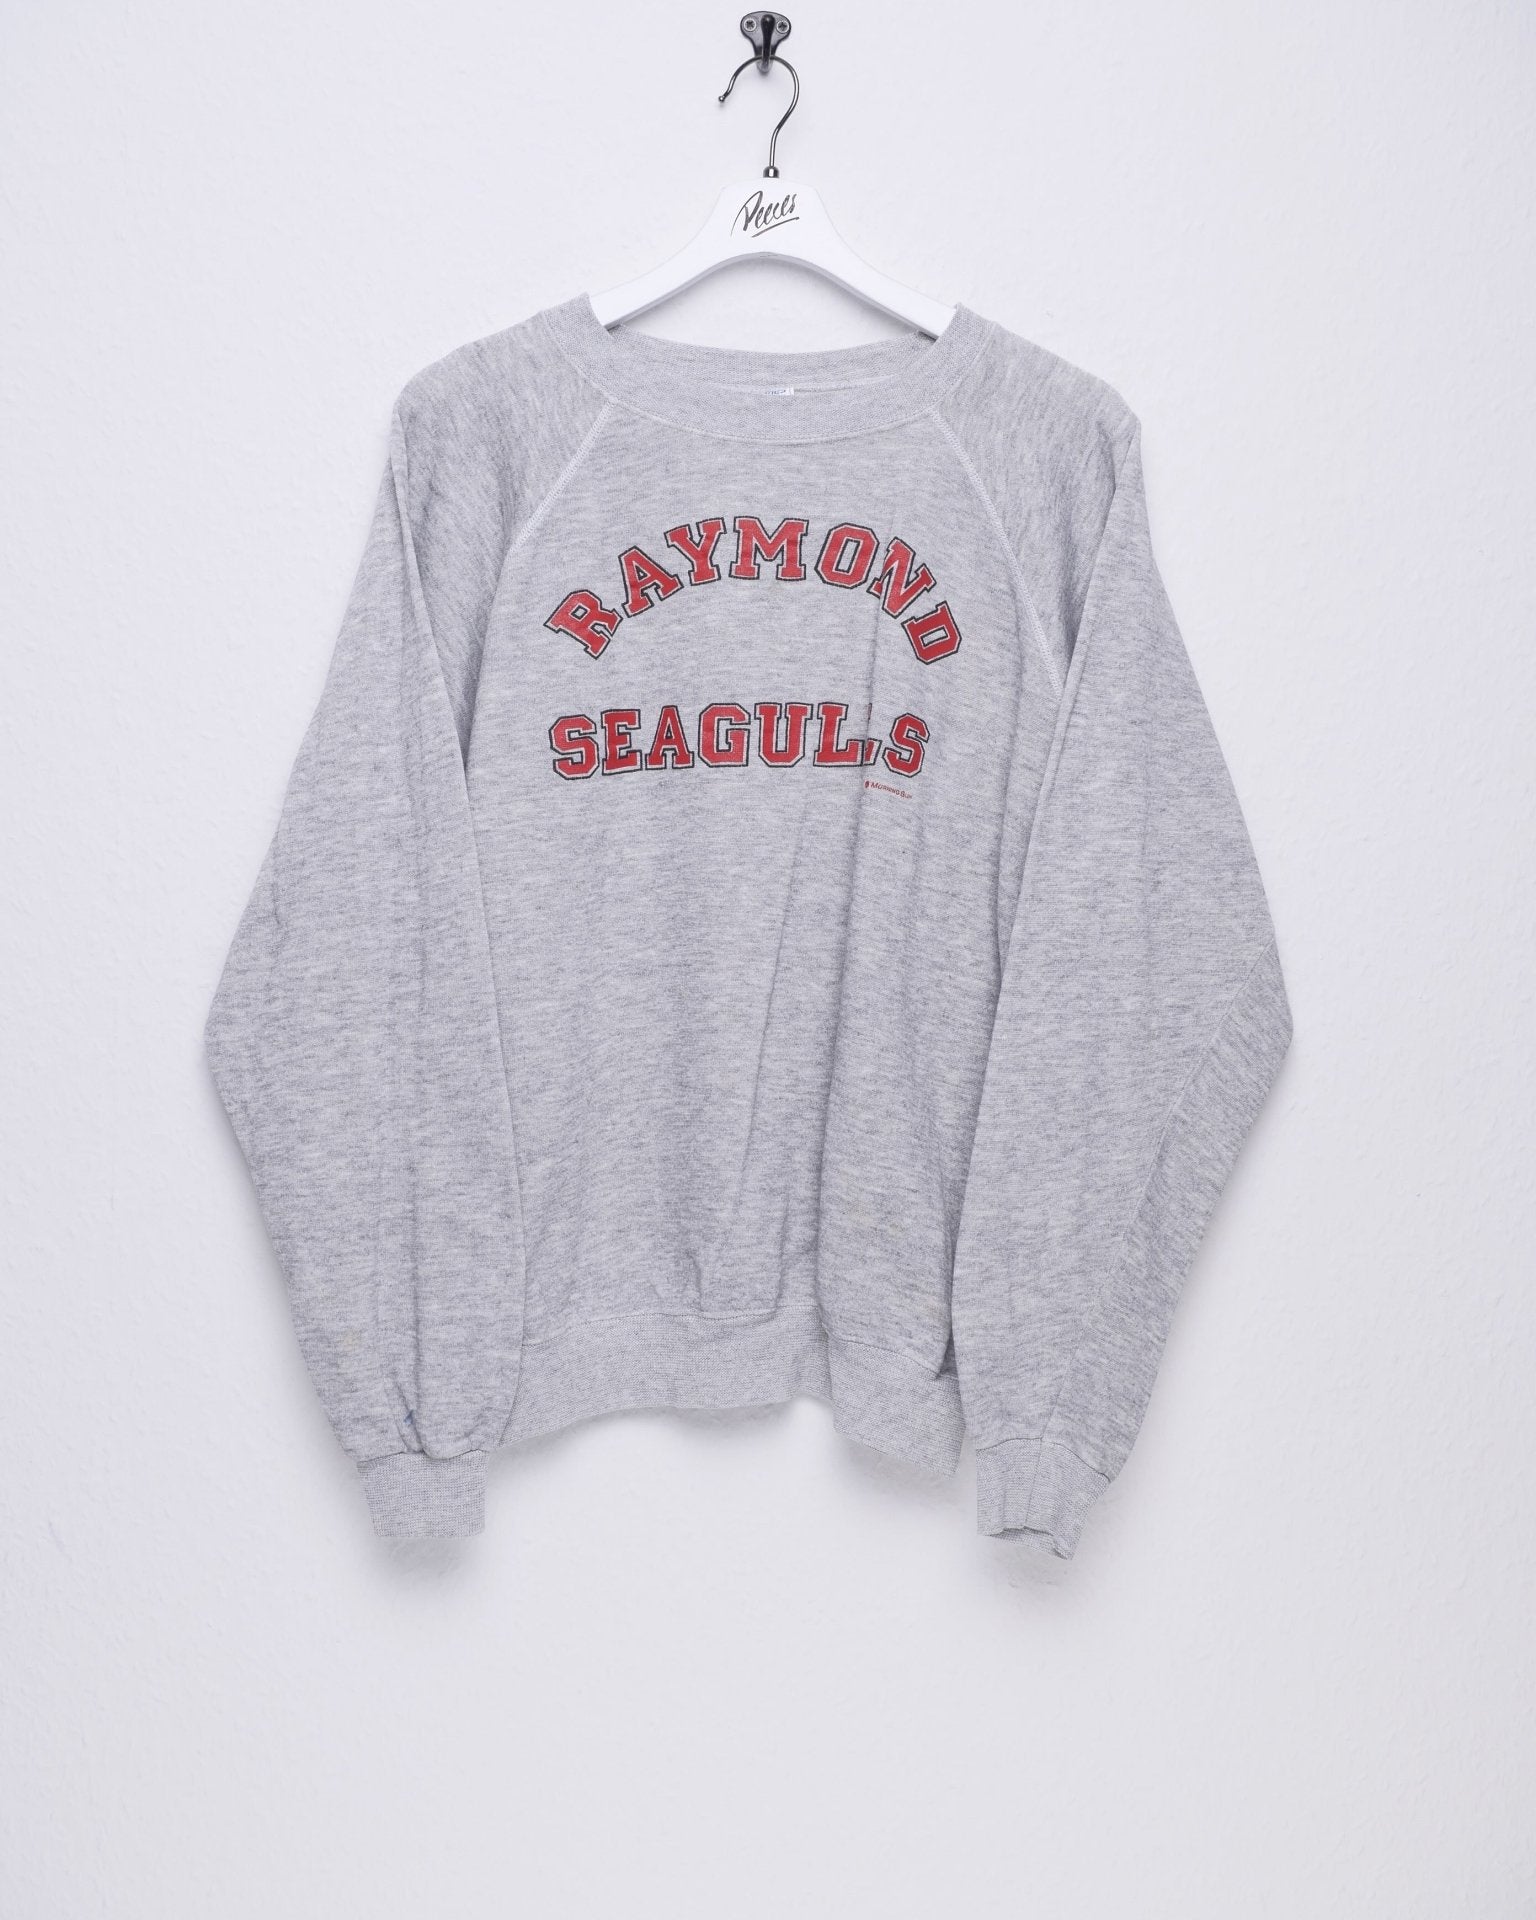 hanes 'Baymond Seagulls' printed Spellout Sweater - Peeces